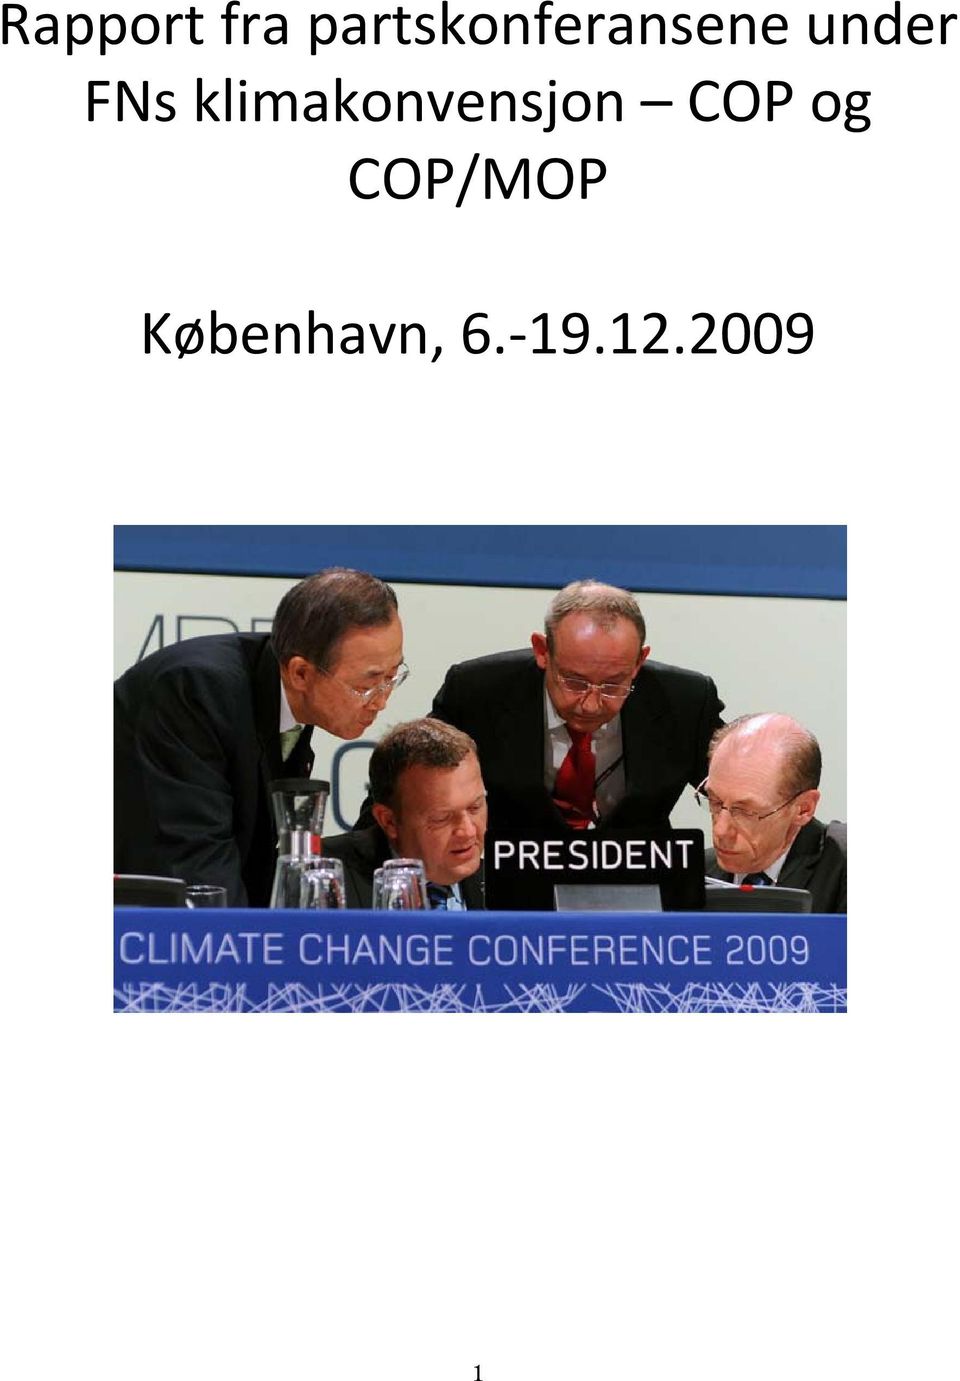 FNs klimakonvensjon COP